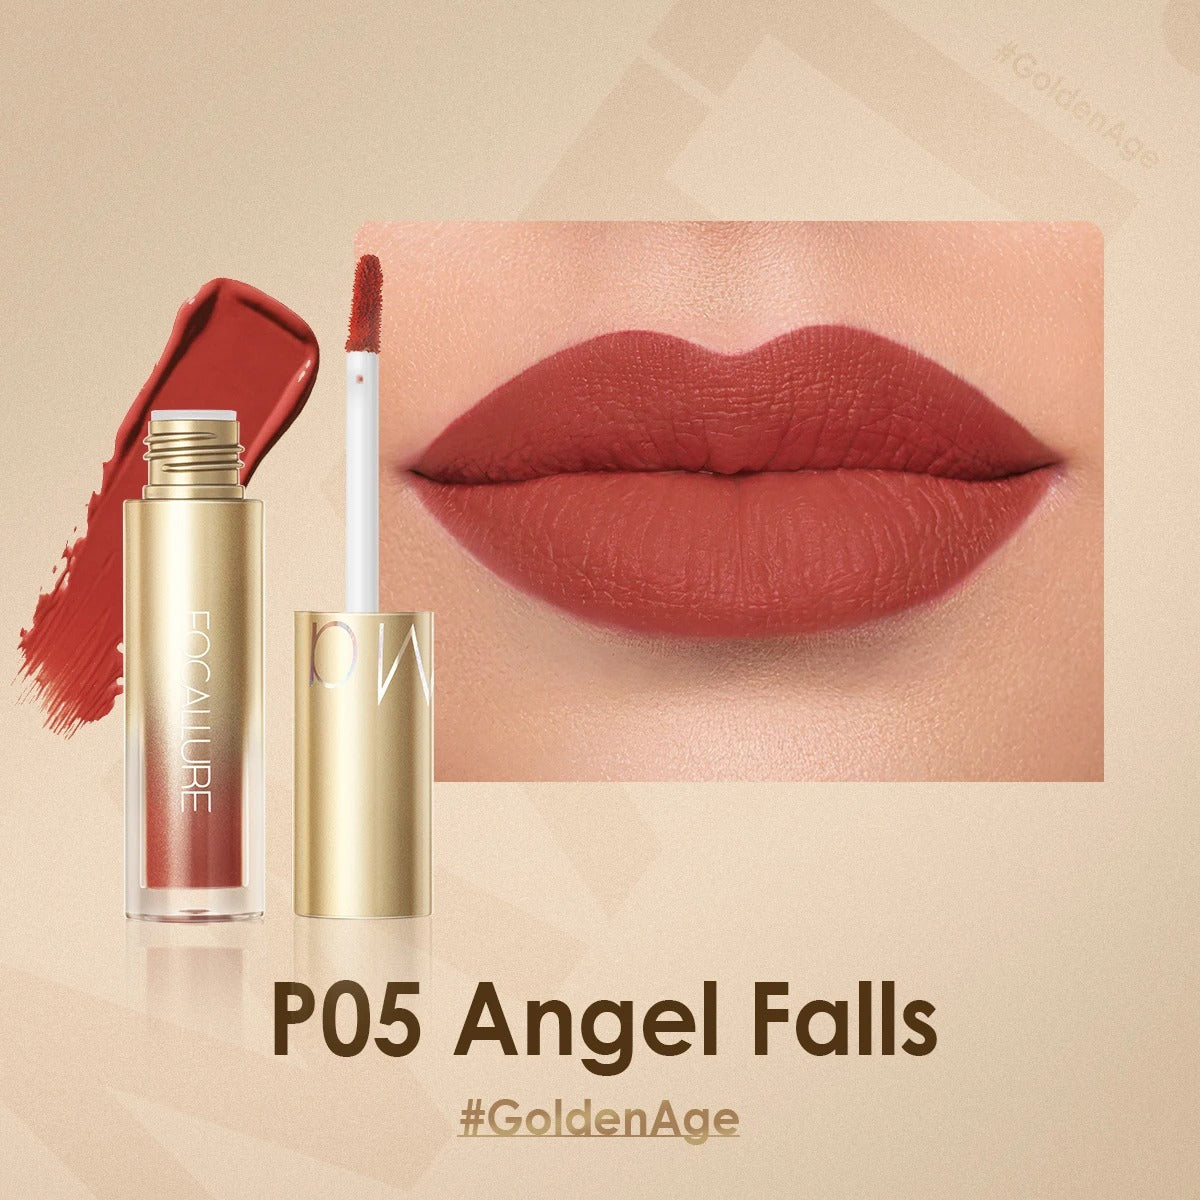 Focallure Waterproof Matte Lipstick #GoldenAge